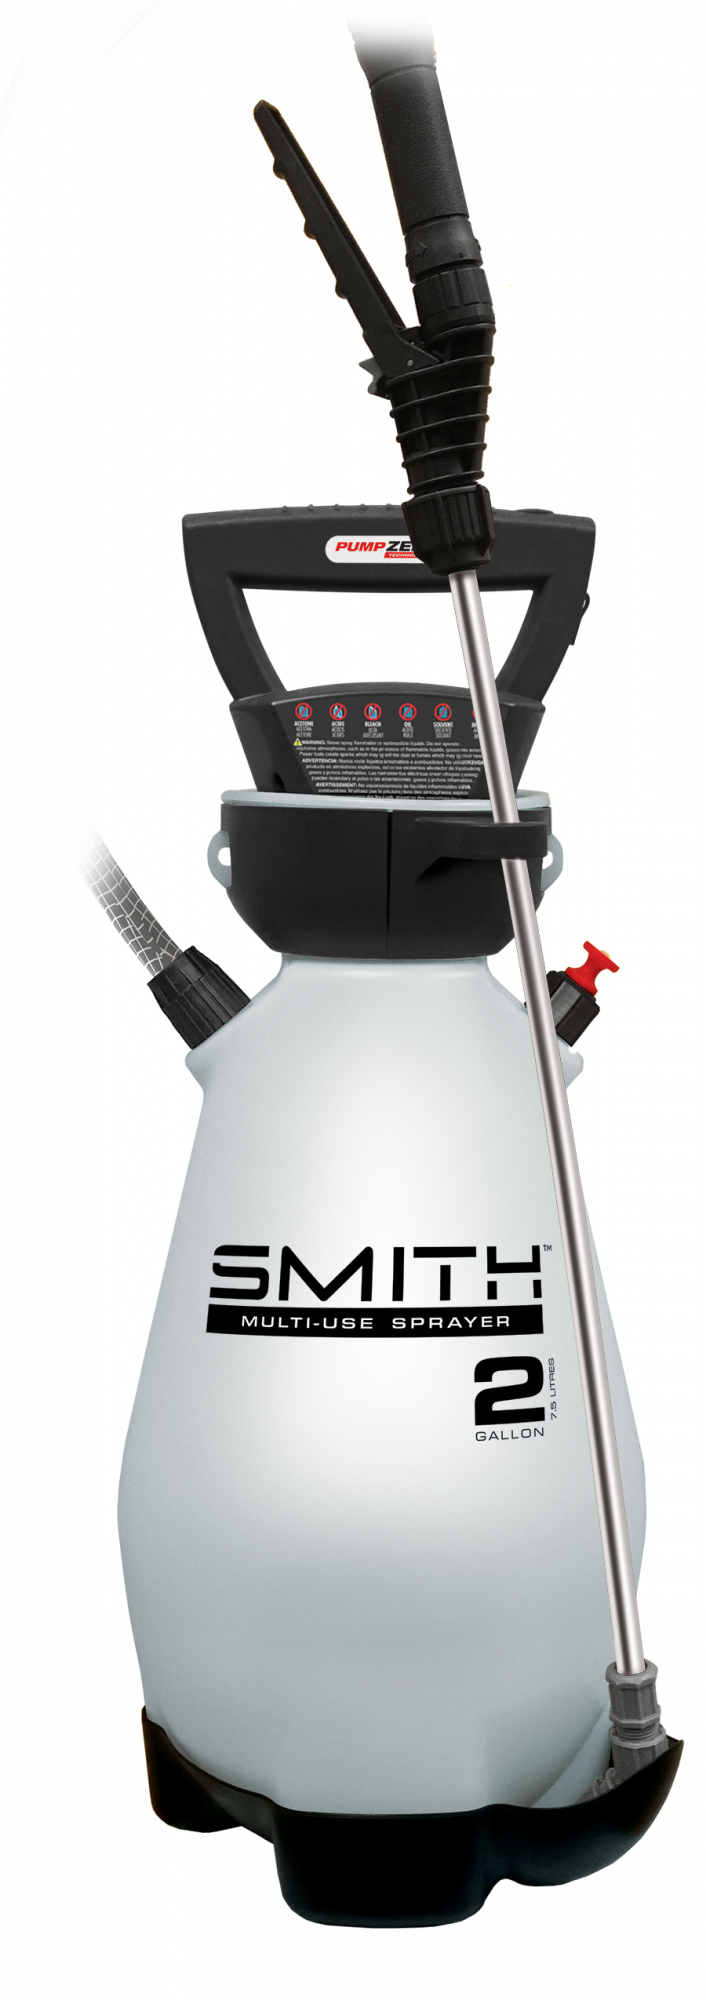 Smith Multi-Use 2 Gallon Lithum-Ion Powered Sprayer, Model 190671